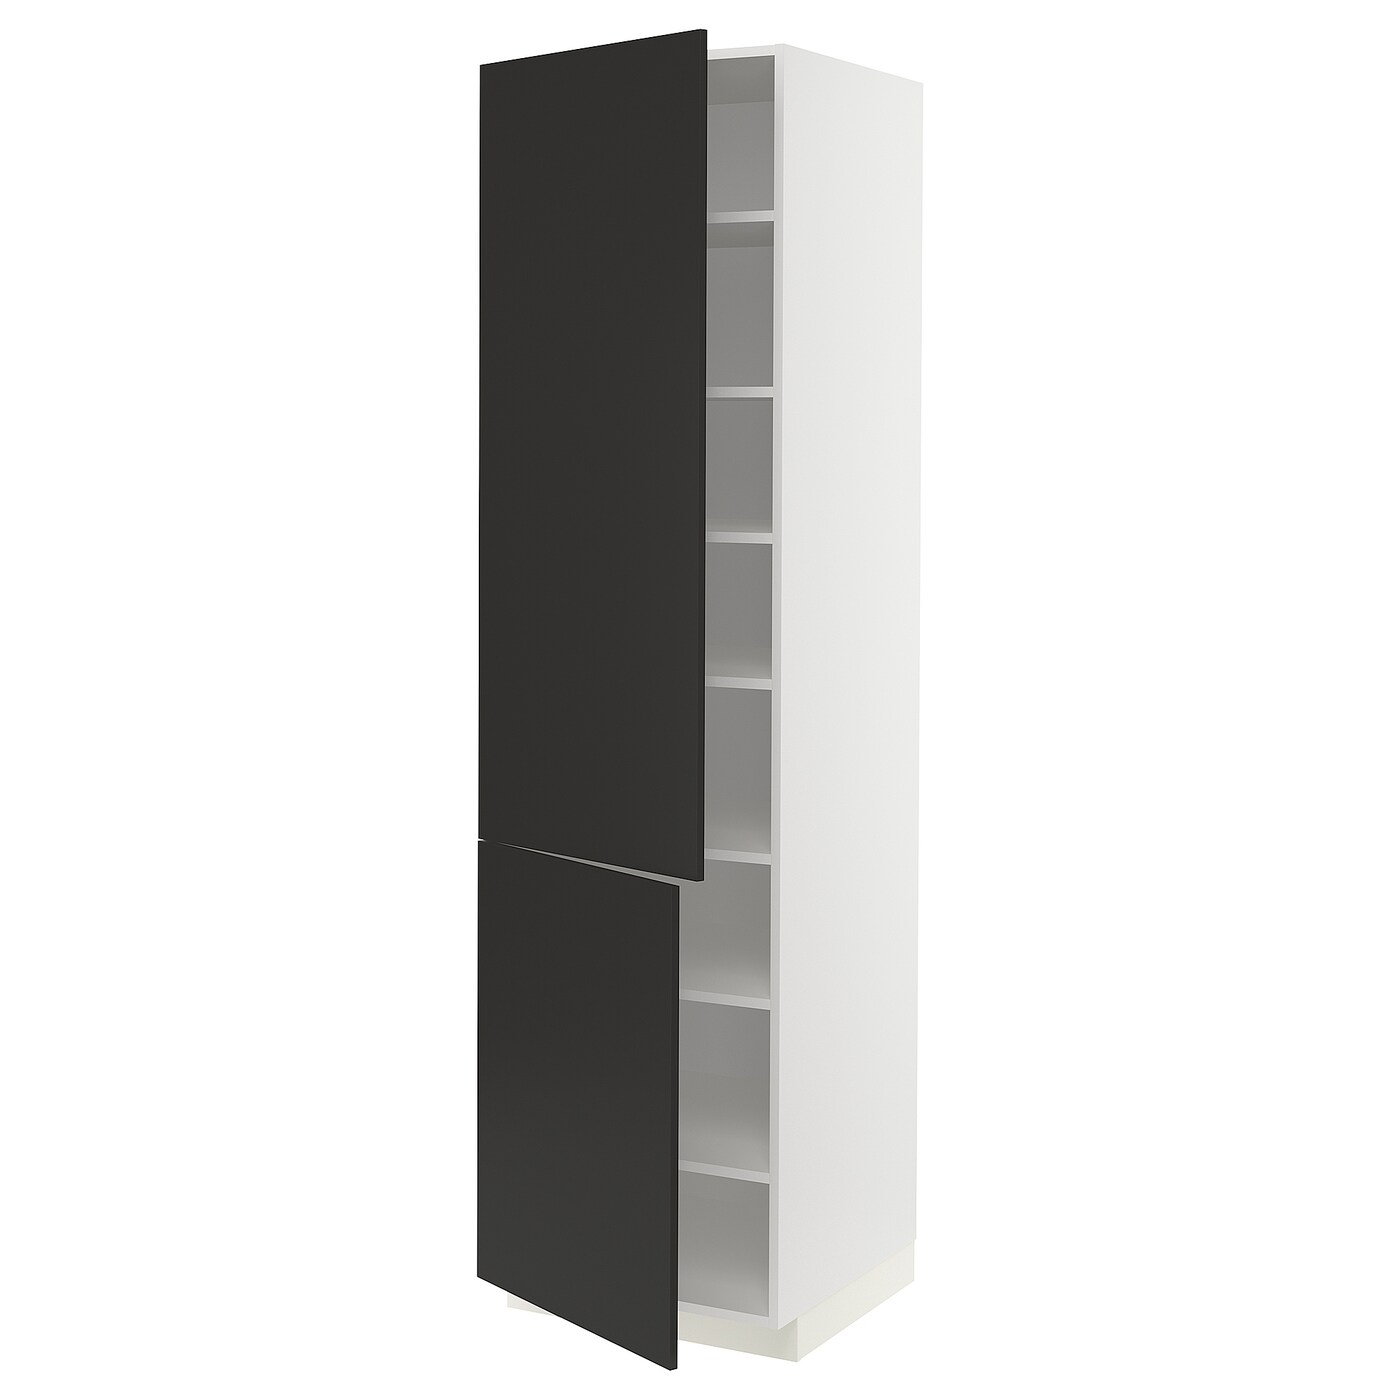 Высокий кухонный шкаф - IKEA METOD/МЕТОД ИКЕА, 220х60х60 см, белый/черный